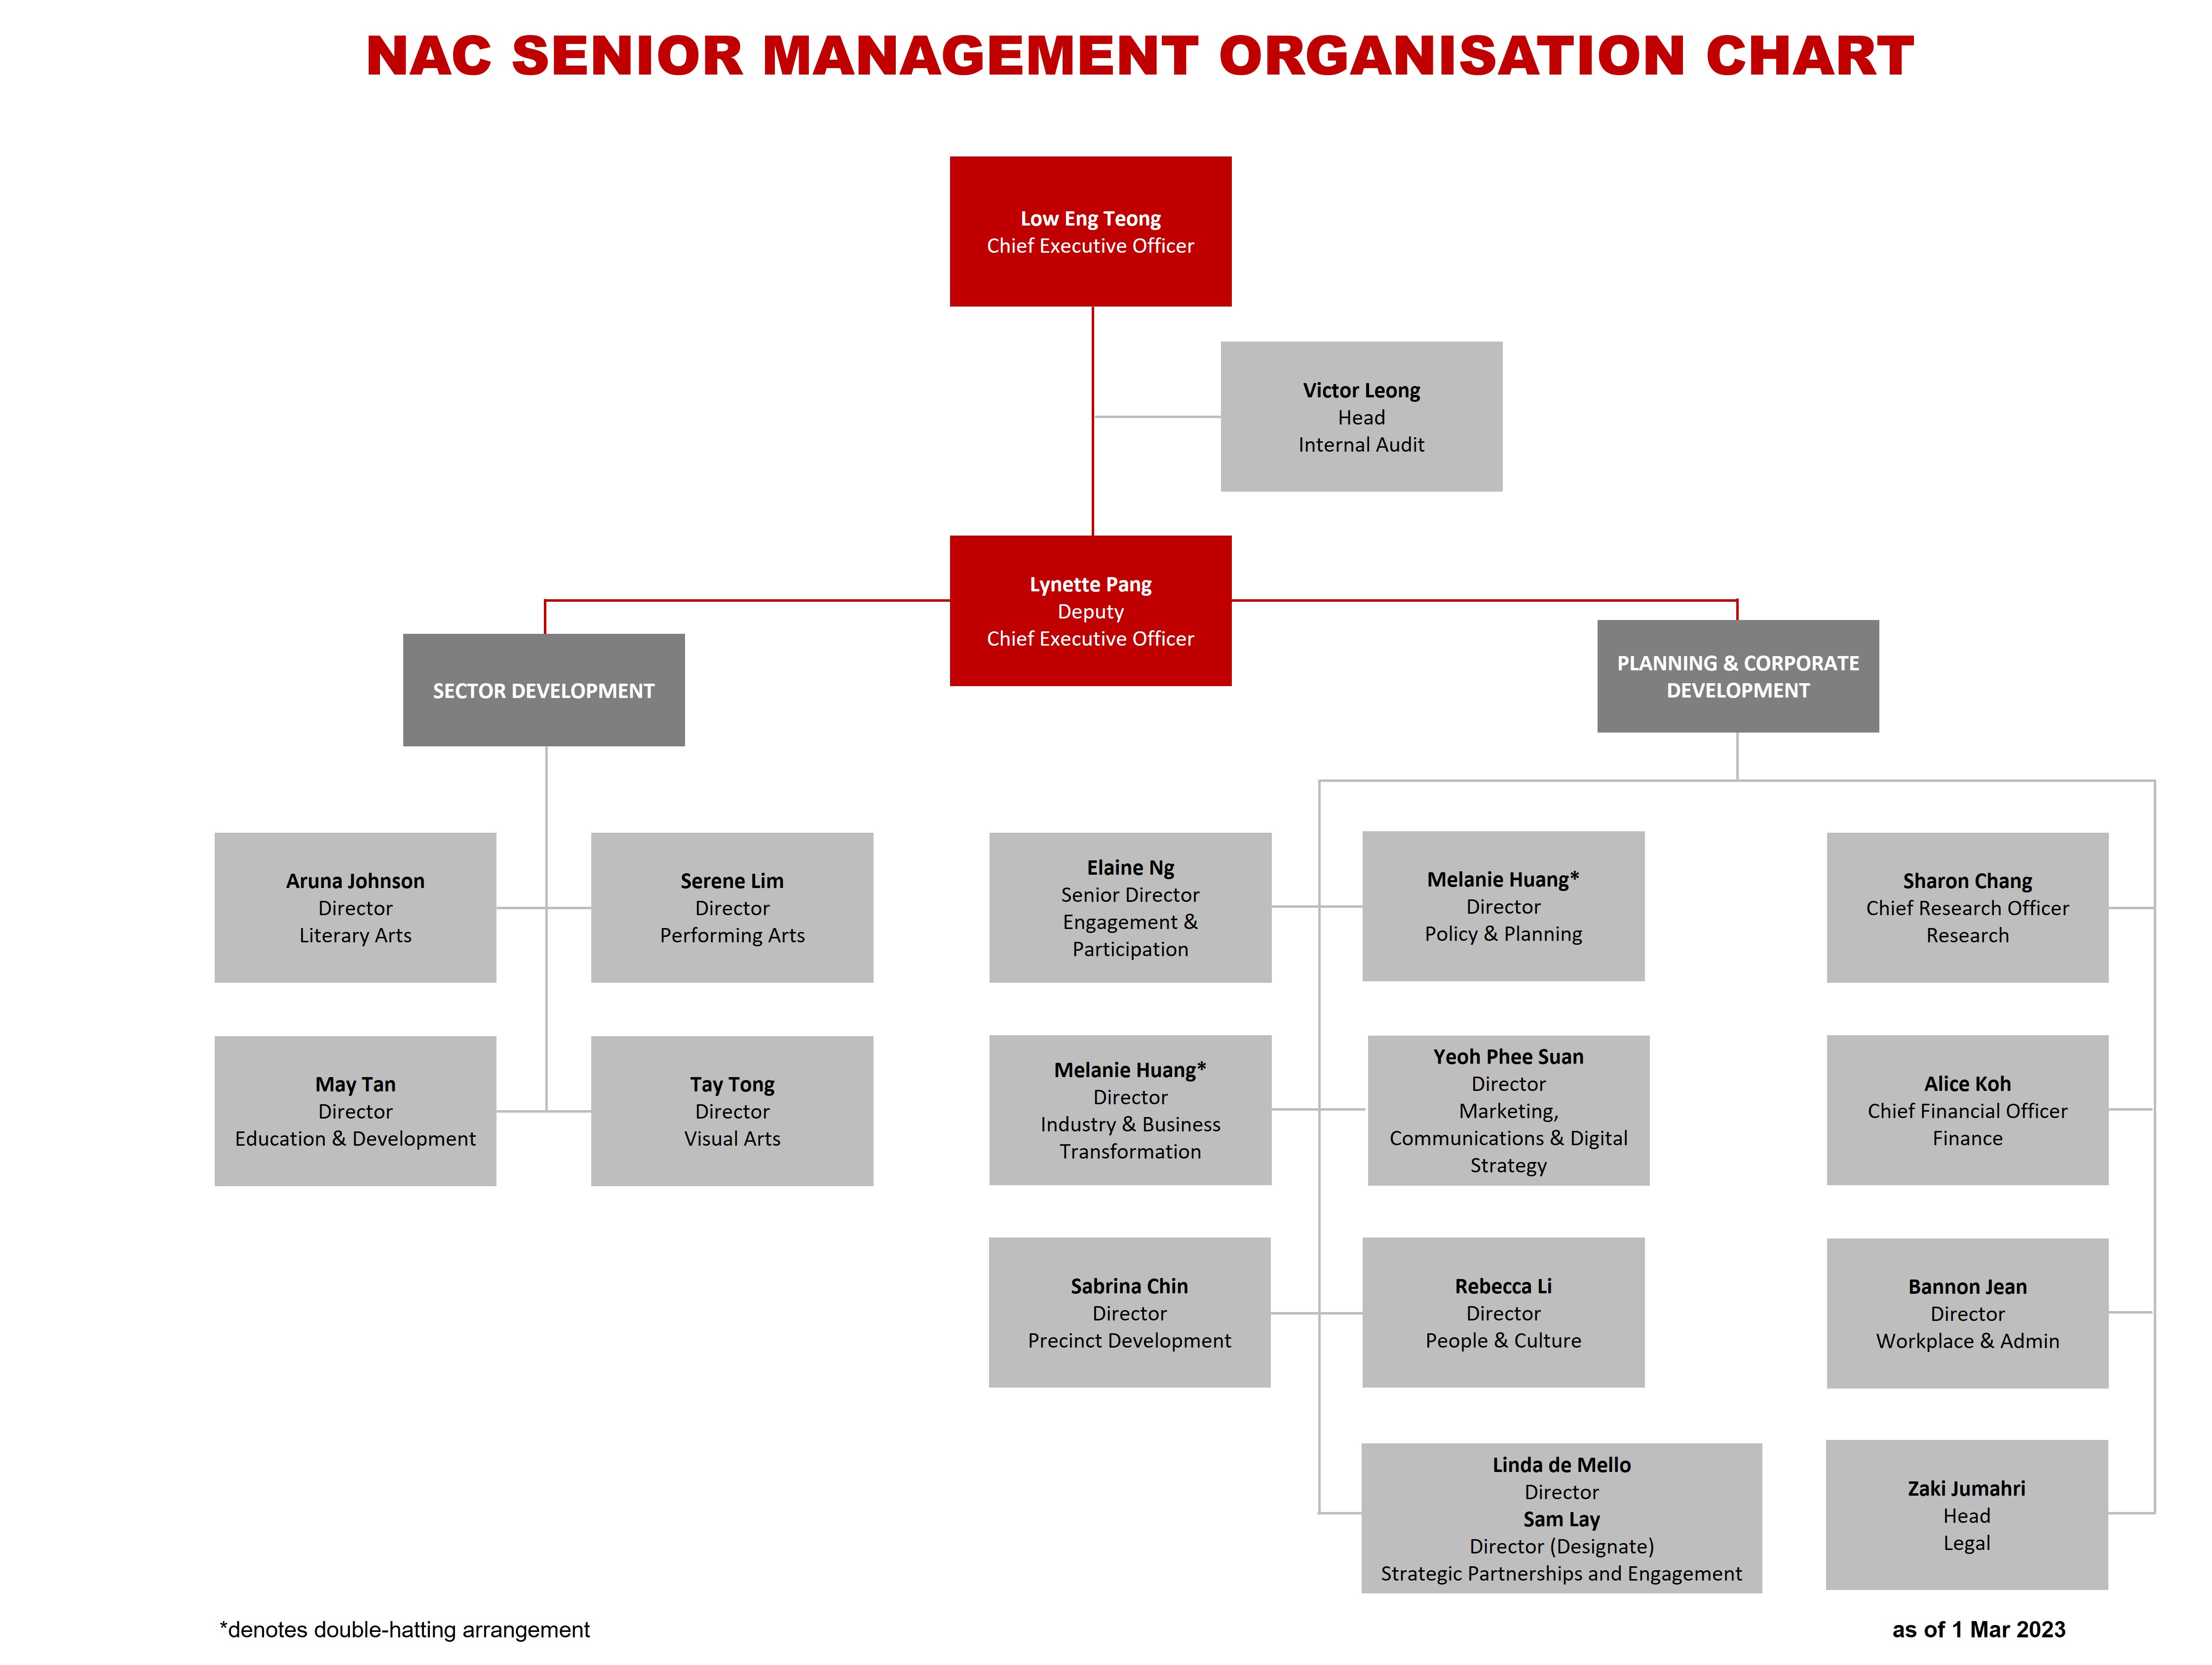 NAC SMM Org Chart  - 1 Mar 23